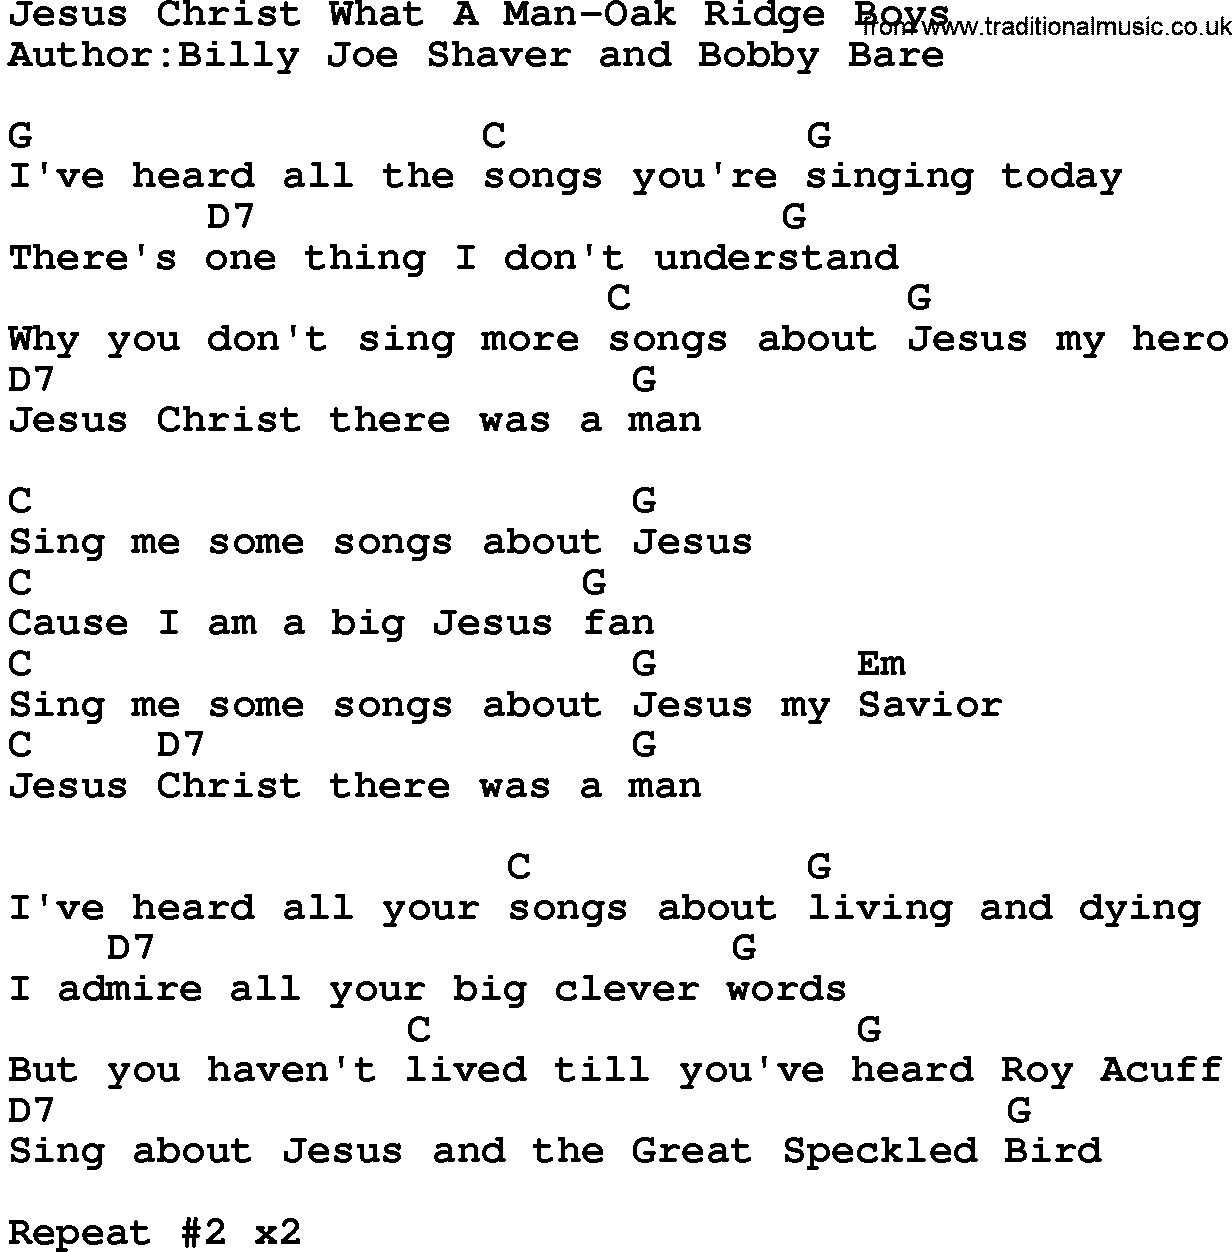 Country music song: Jesus Christ What A Man-Oak Ridge Boys lyrics and chords